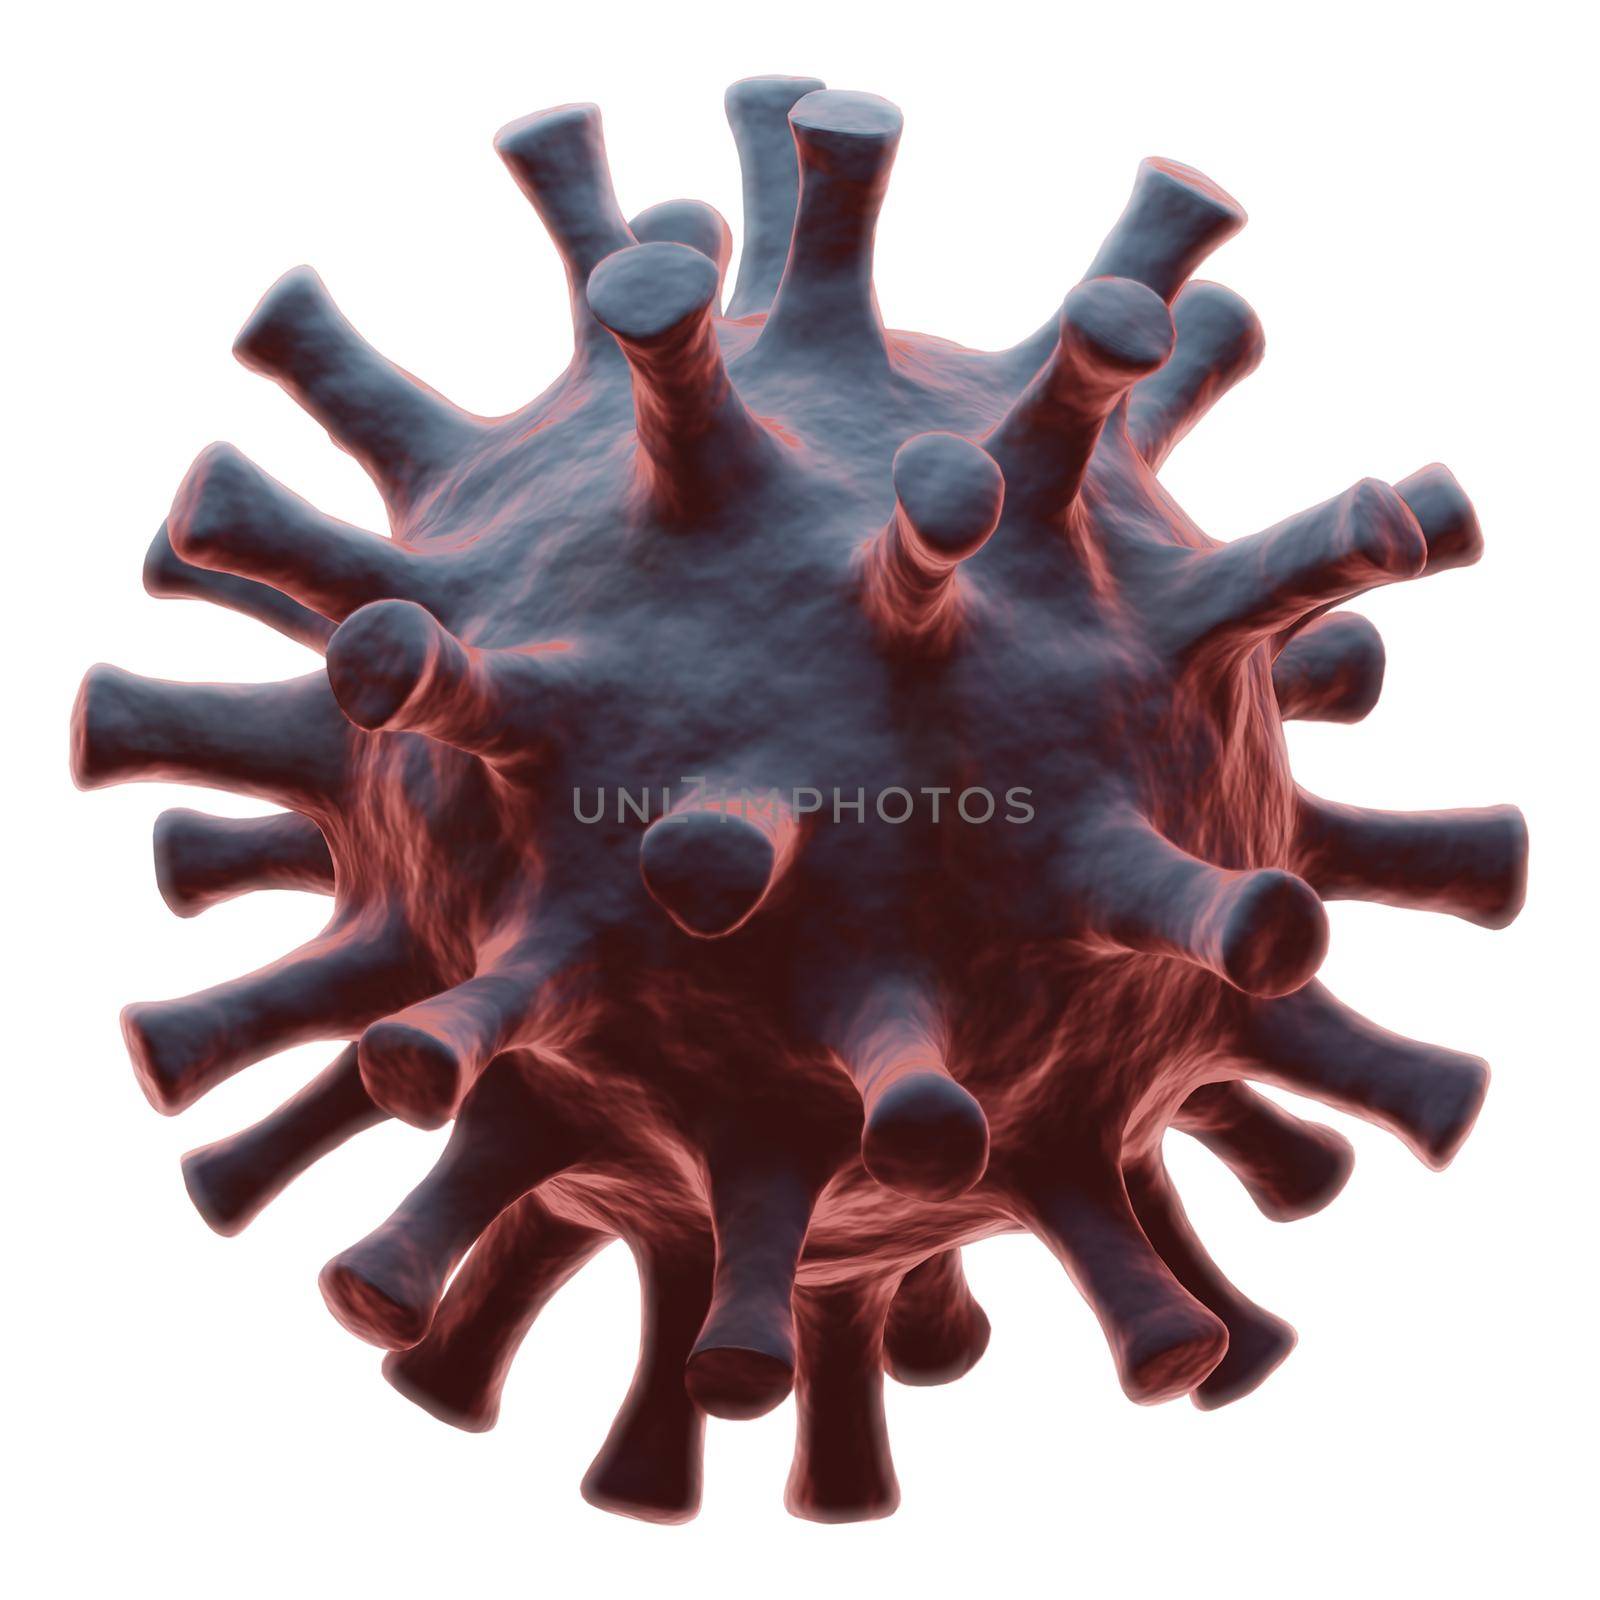 isolated 3d render of corona virus by mtkang